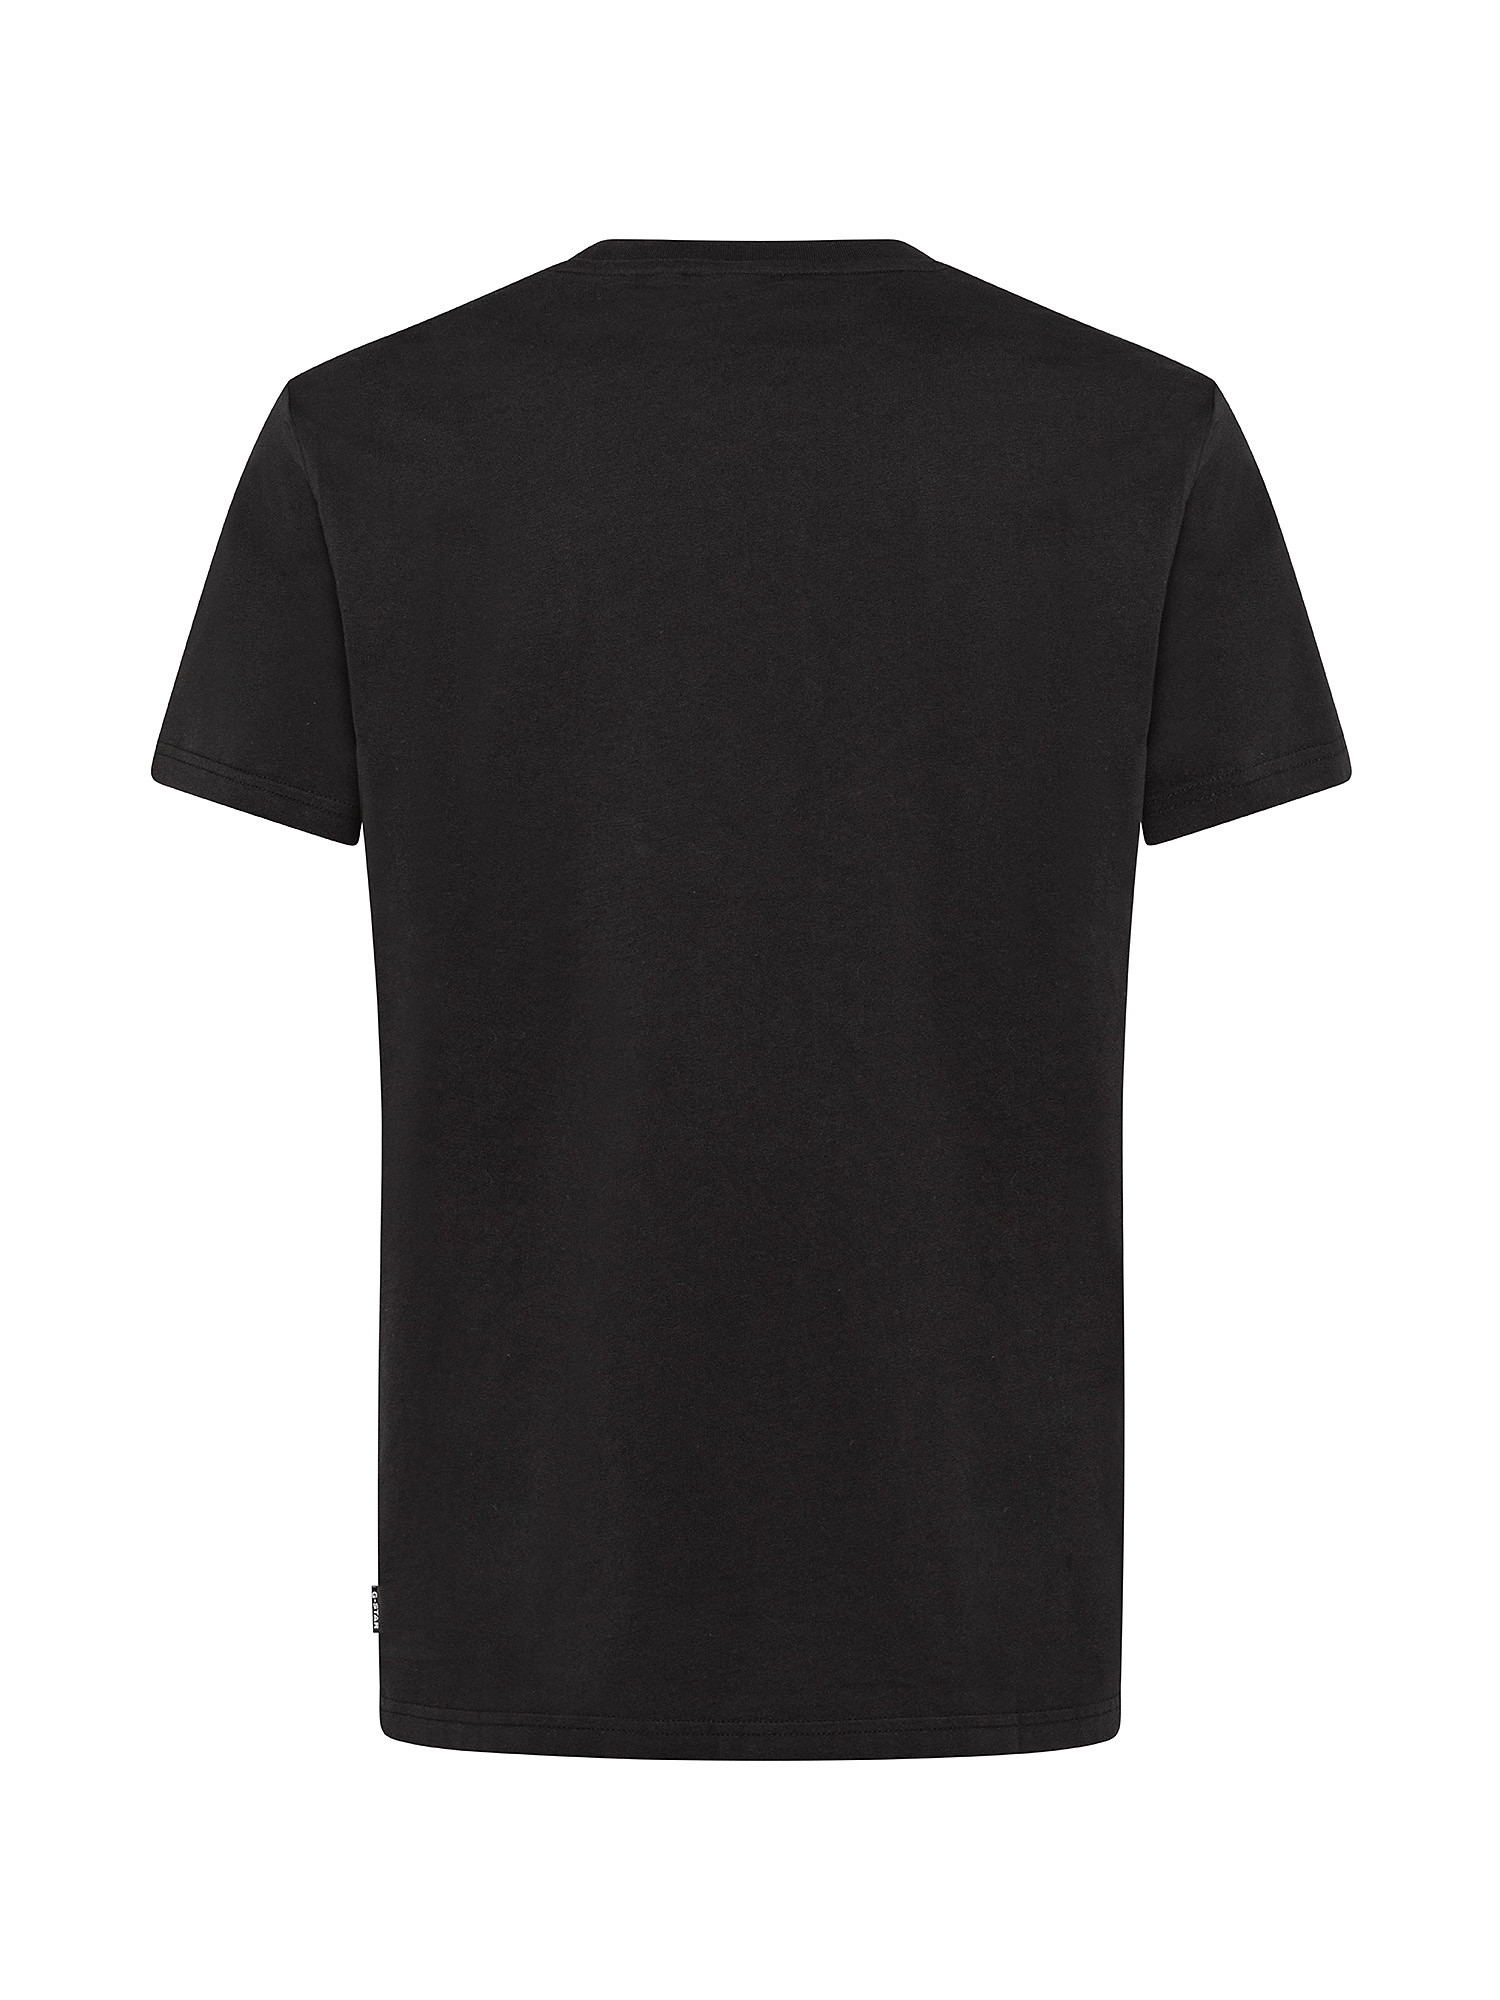 Raw t-shirt grafica slim, Nero, large image number 1